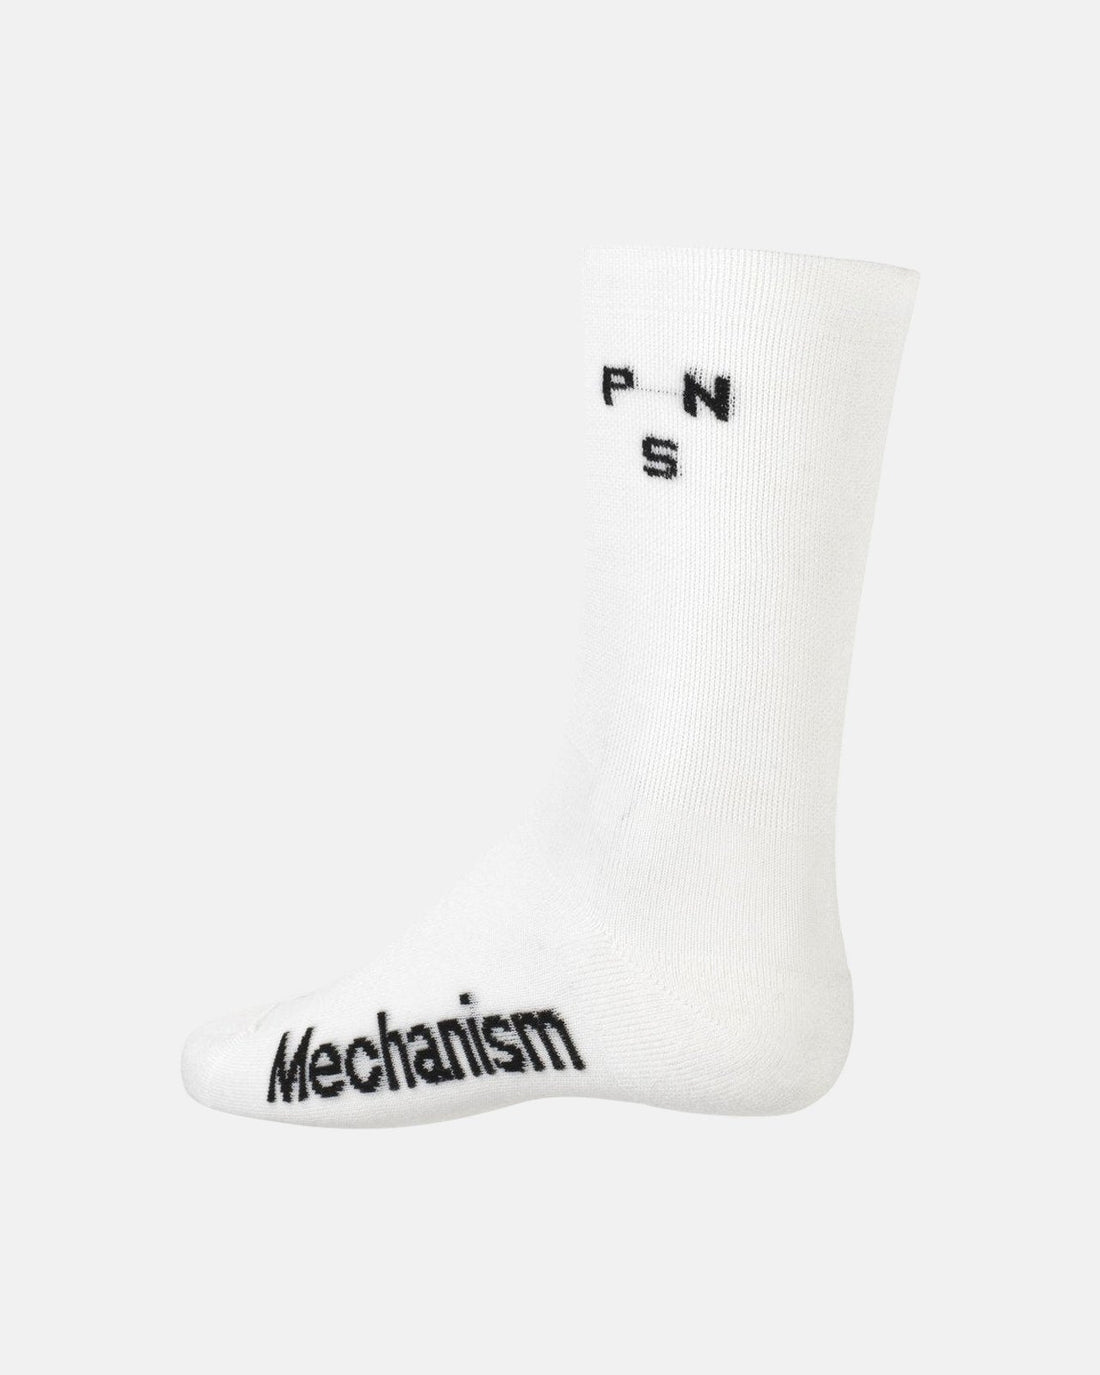 Mechanism Thermal Socks - White - Pas Normal Studios